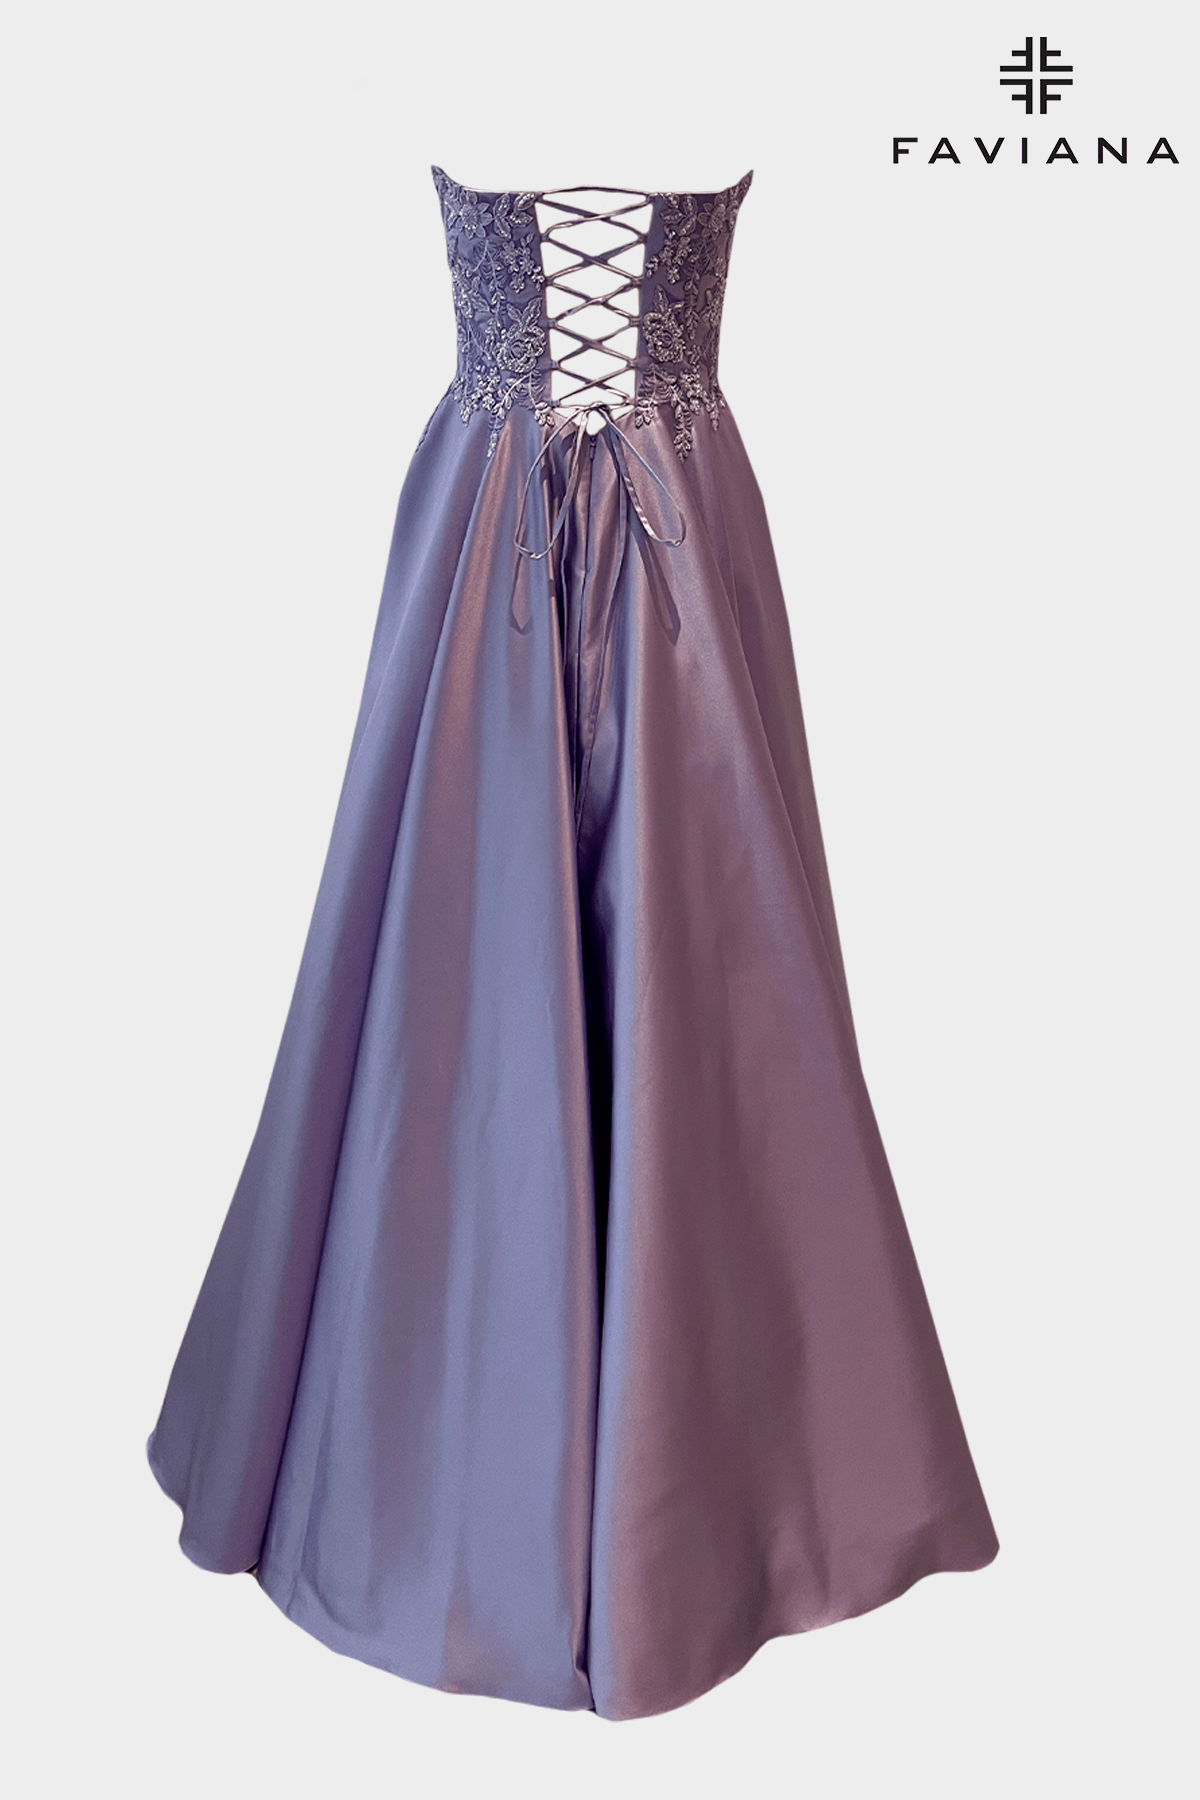 Faviana ES10892 Long Strapless Formal Prom Dress